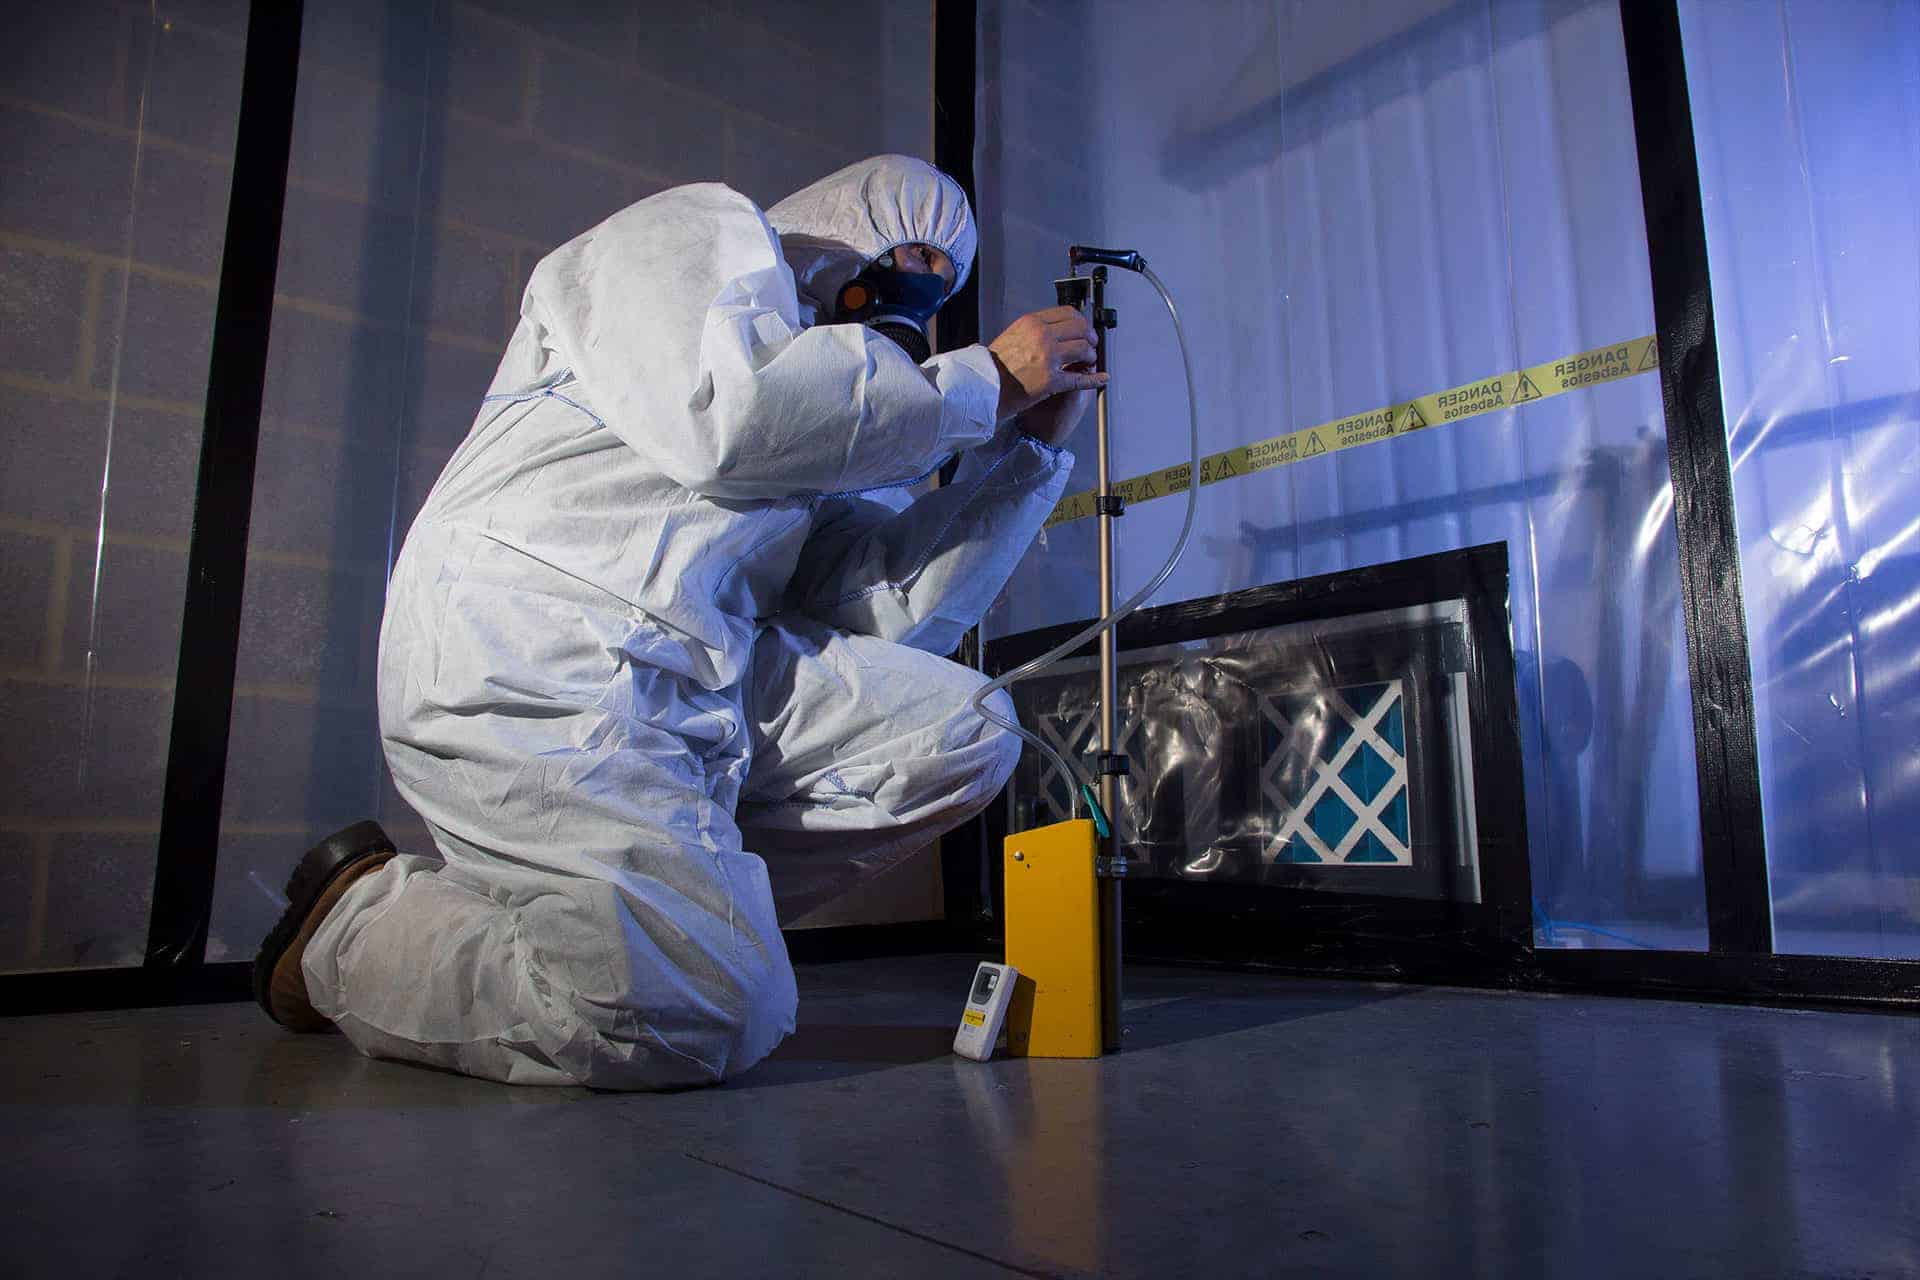 Man in HAZMAT suit taking samples and monitoring air for asbestos